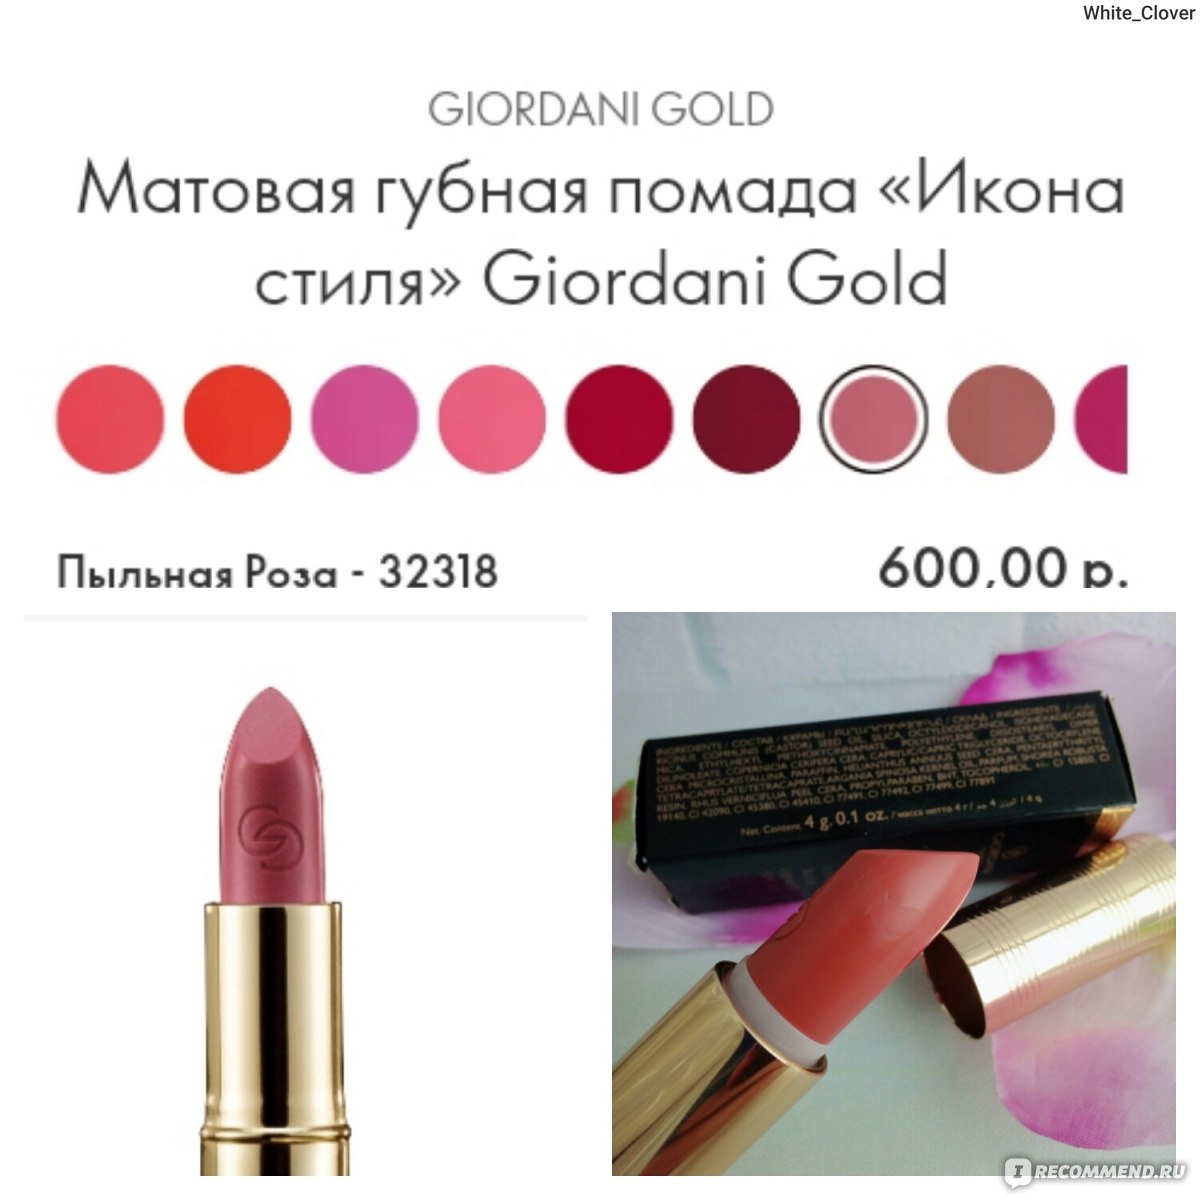 Губная помада oriflame giordani gold икона стиля - отзывы e-otzovik.ru